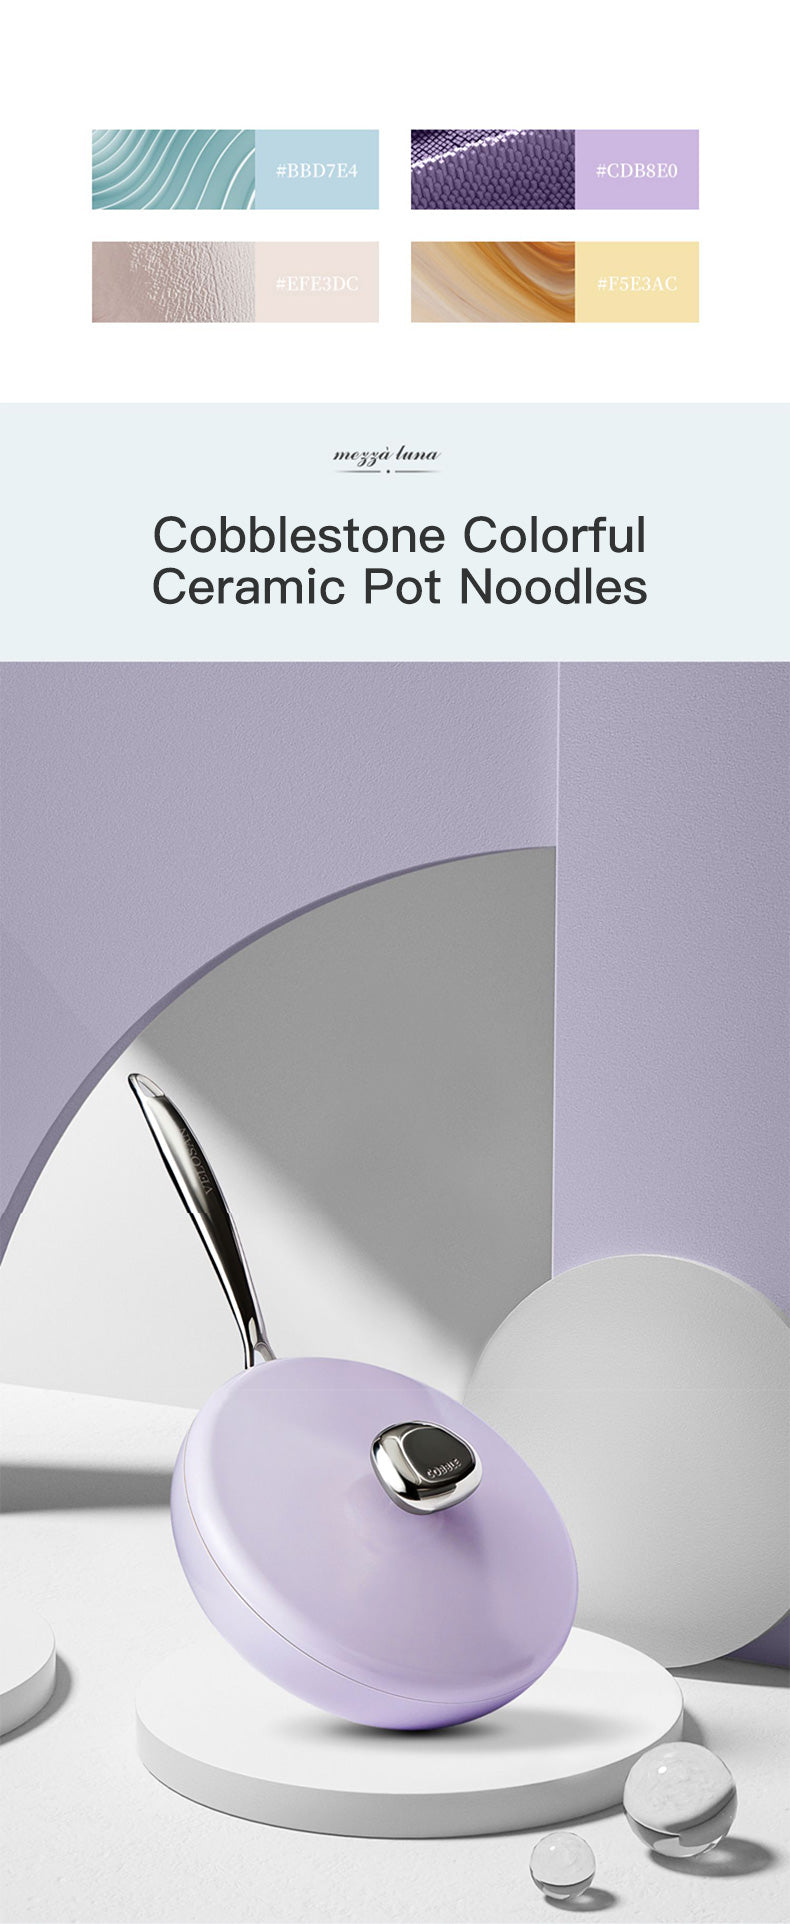 Velosan Pebble Series 8Pcs Ceramic Nonstick Cookware Set – VELOSAN